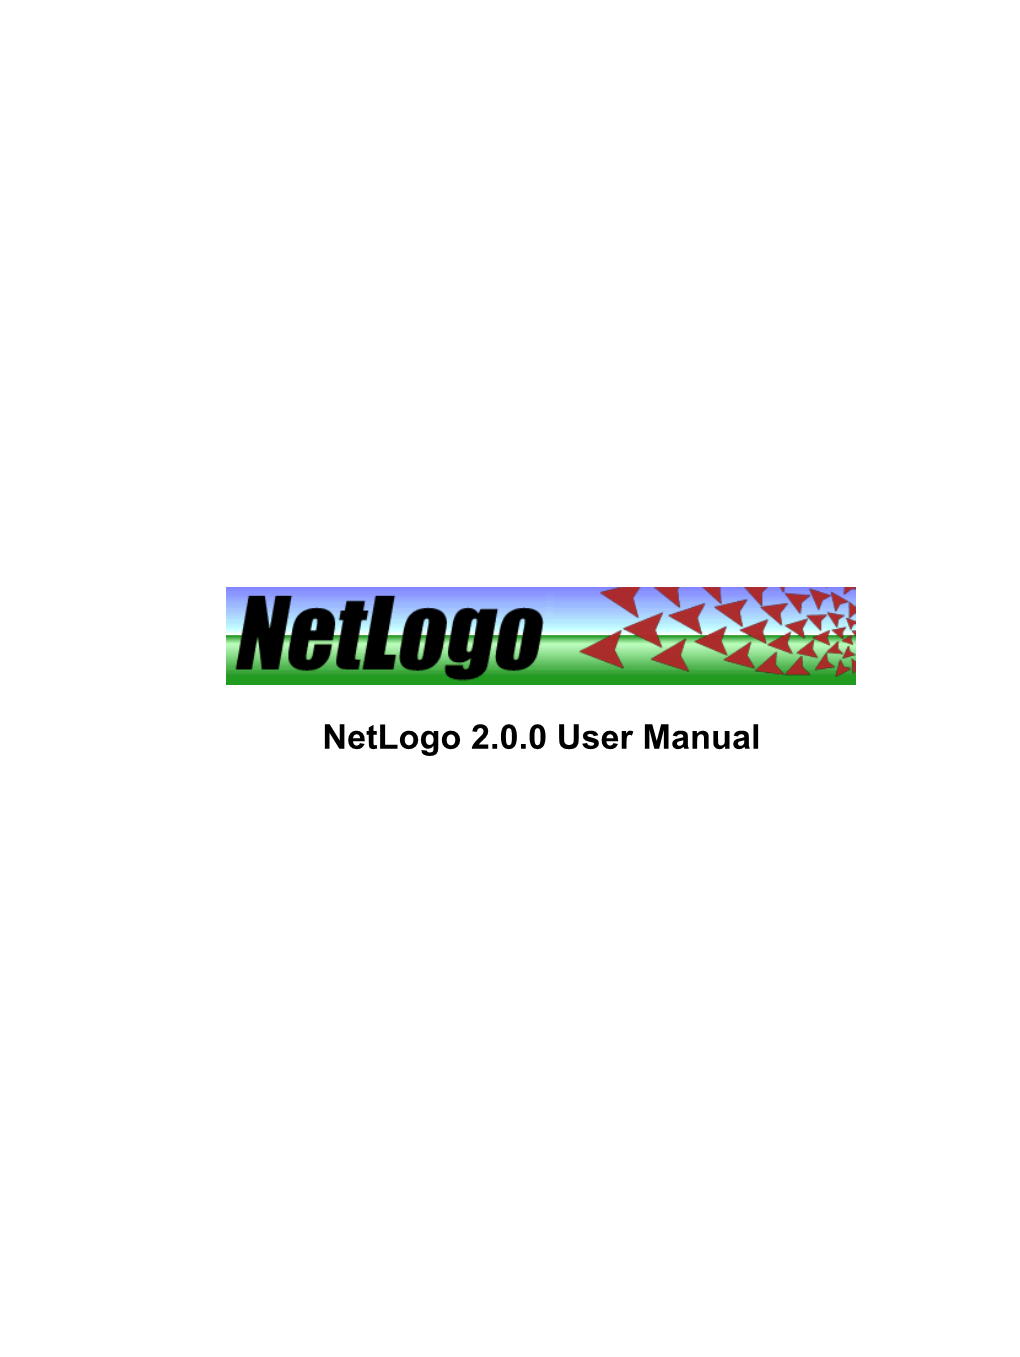 Netlogo 2.0.0 User Manual